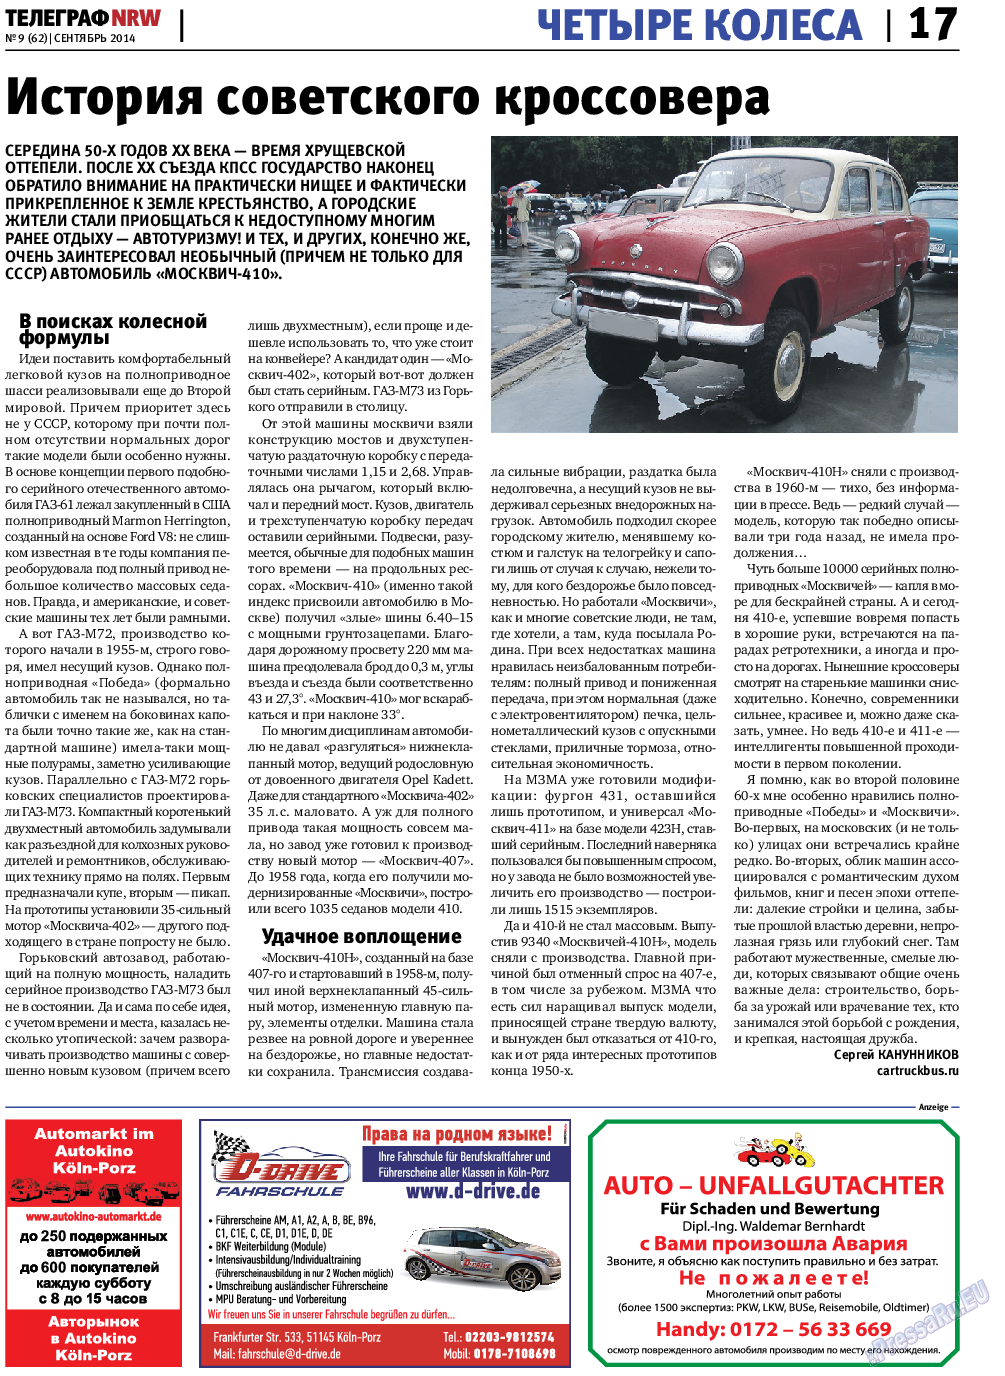 Телеграф NRW, газета. 2014 №9 стр.17